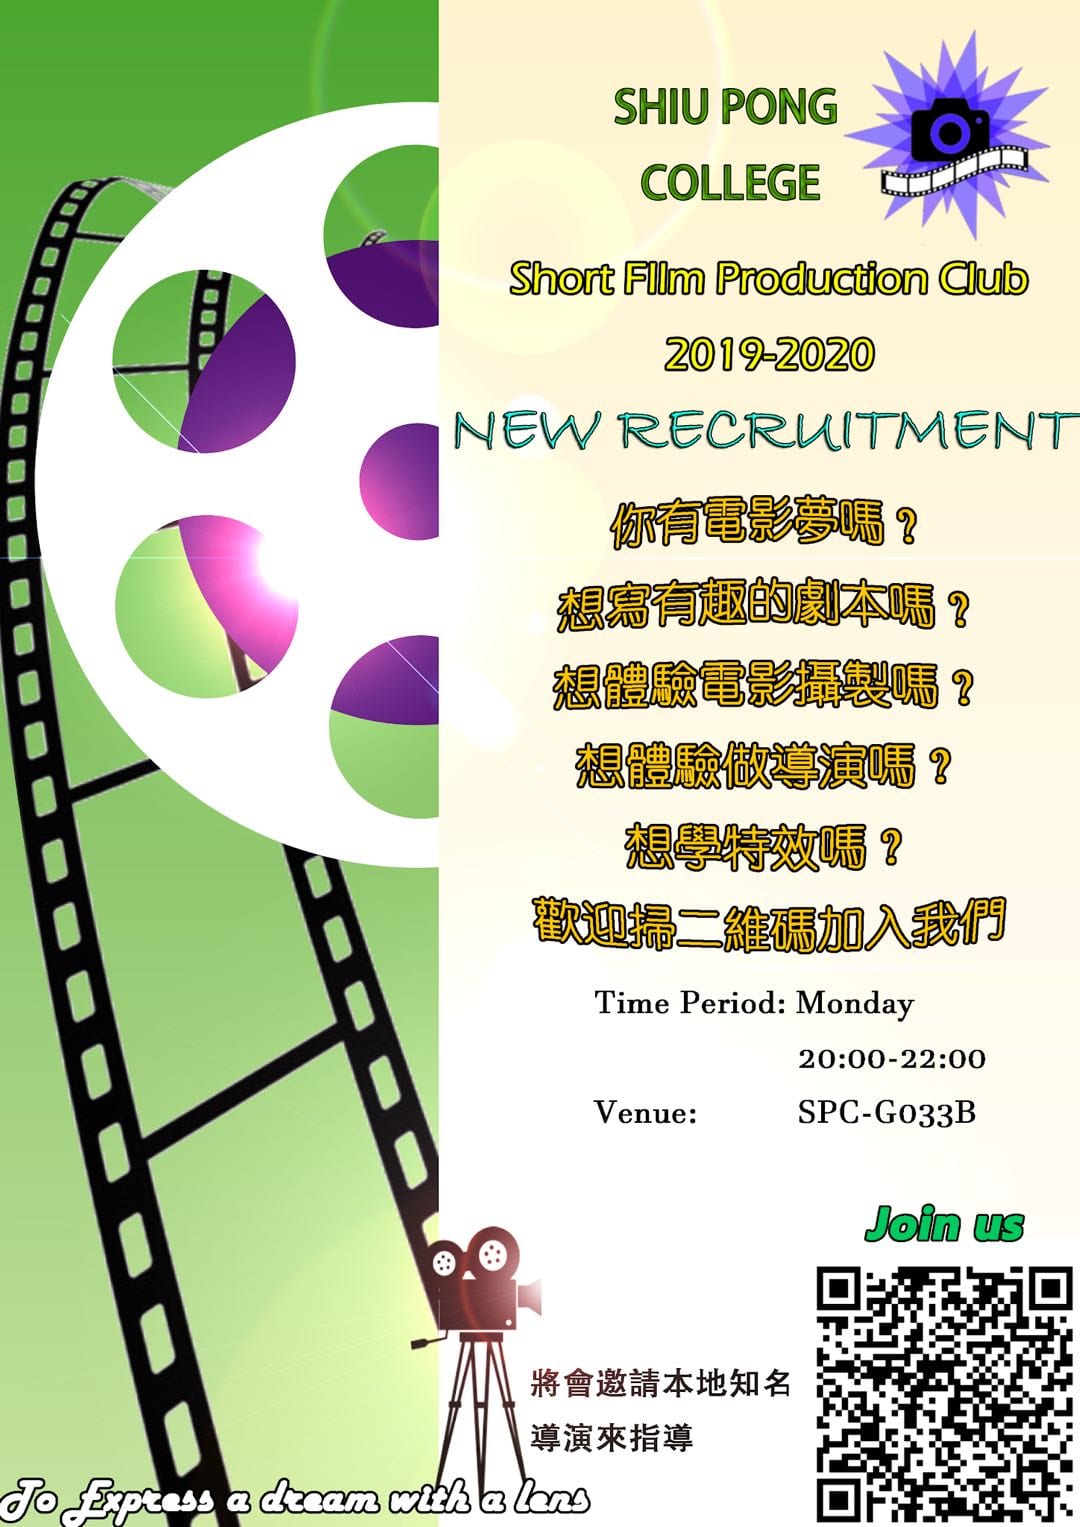 Recruitment: Short Film Production Workshop 2019/20 - Shiu Pong College |  University of Macau